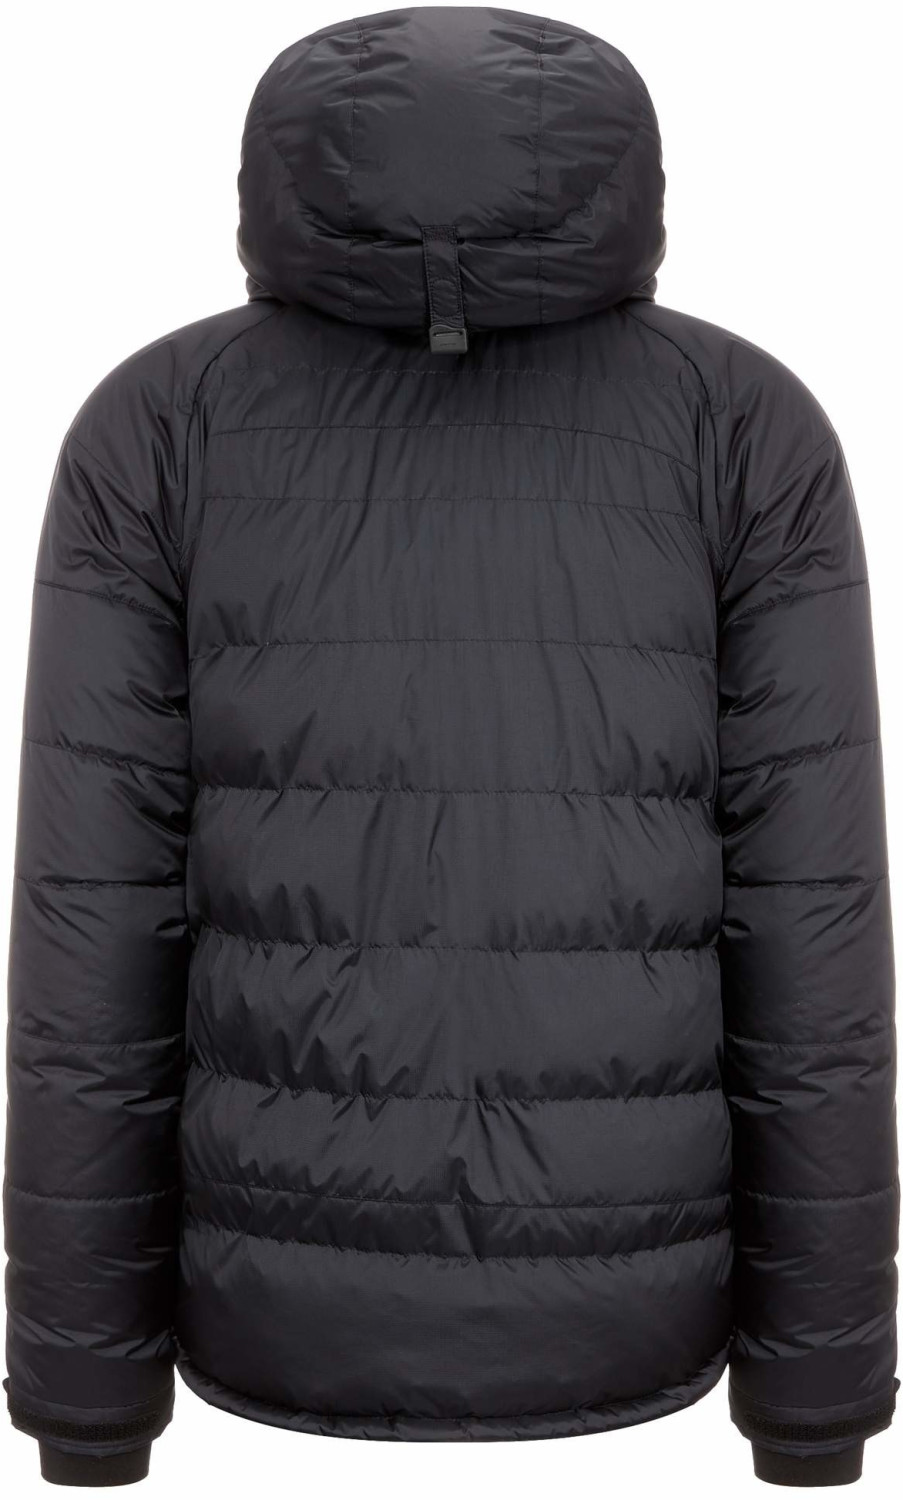 Buy Mountain Equipment Annapurna Jacket Men black from £329.95 (Today ...